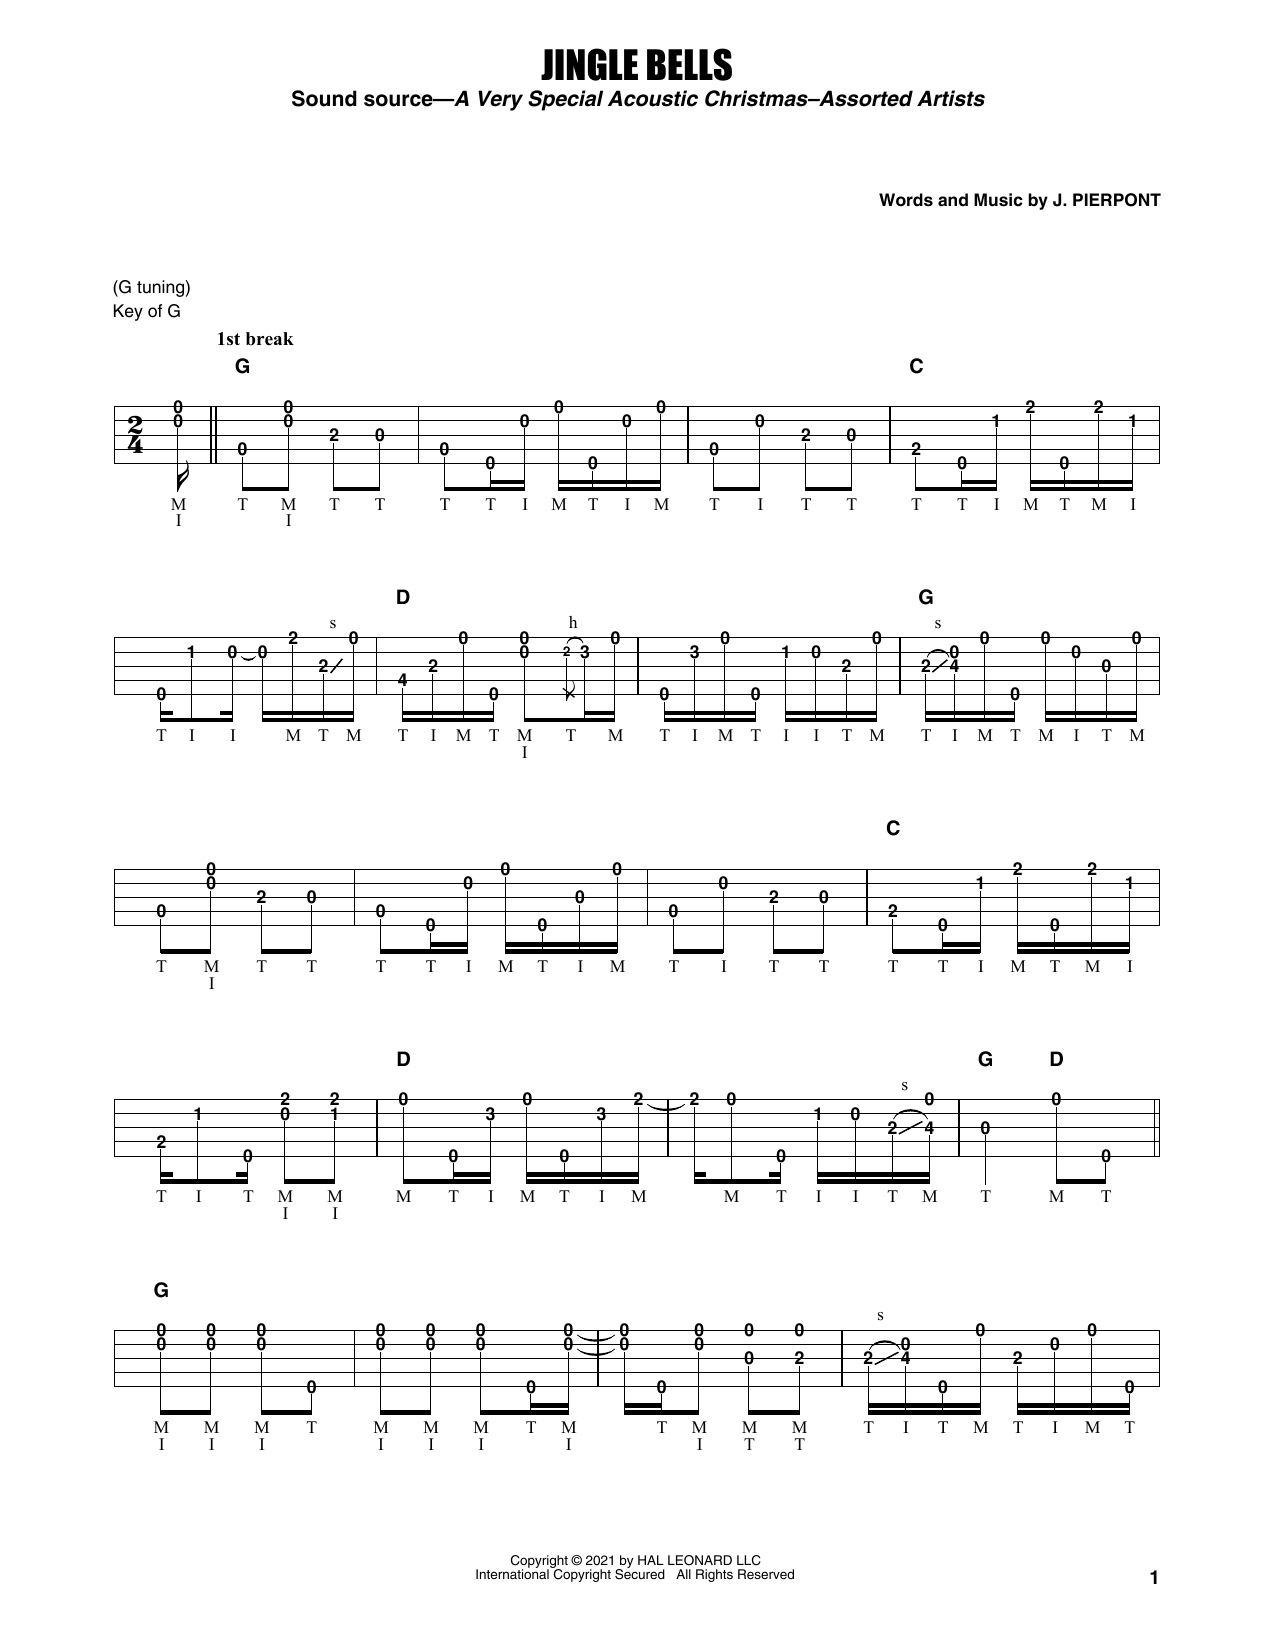 Earl Scruggs Jingle Bells Sheet Music Notes & Chords for Banjo Tab - Download or Print PDF